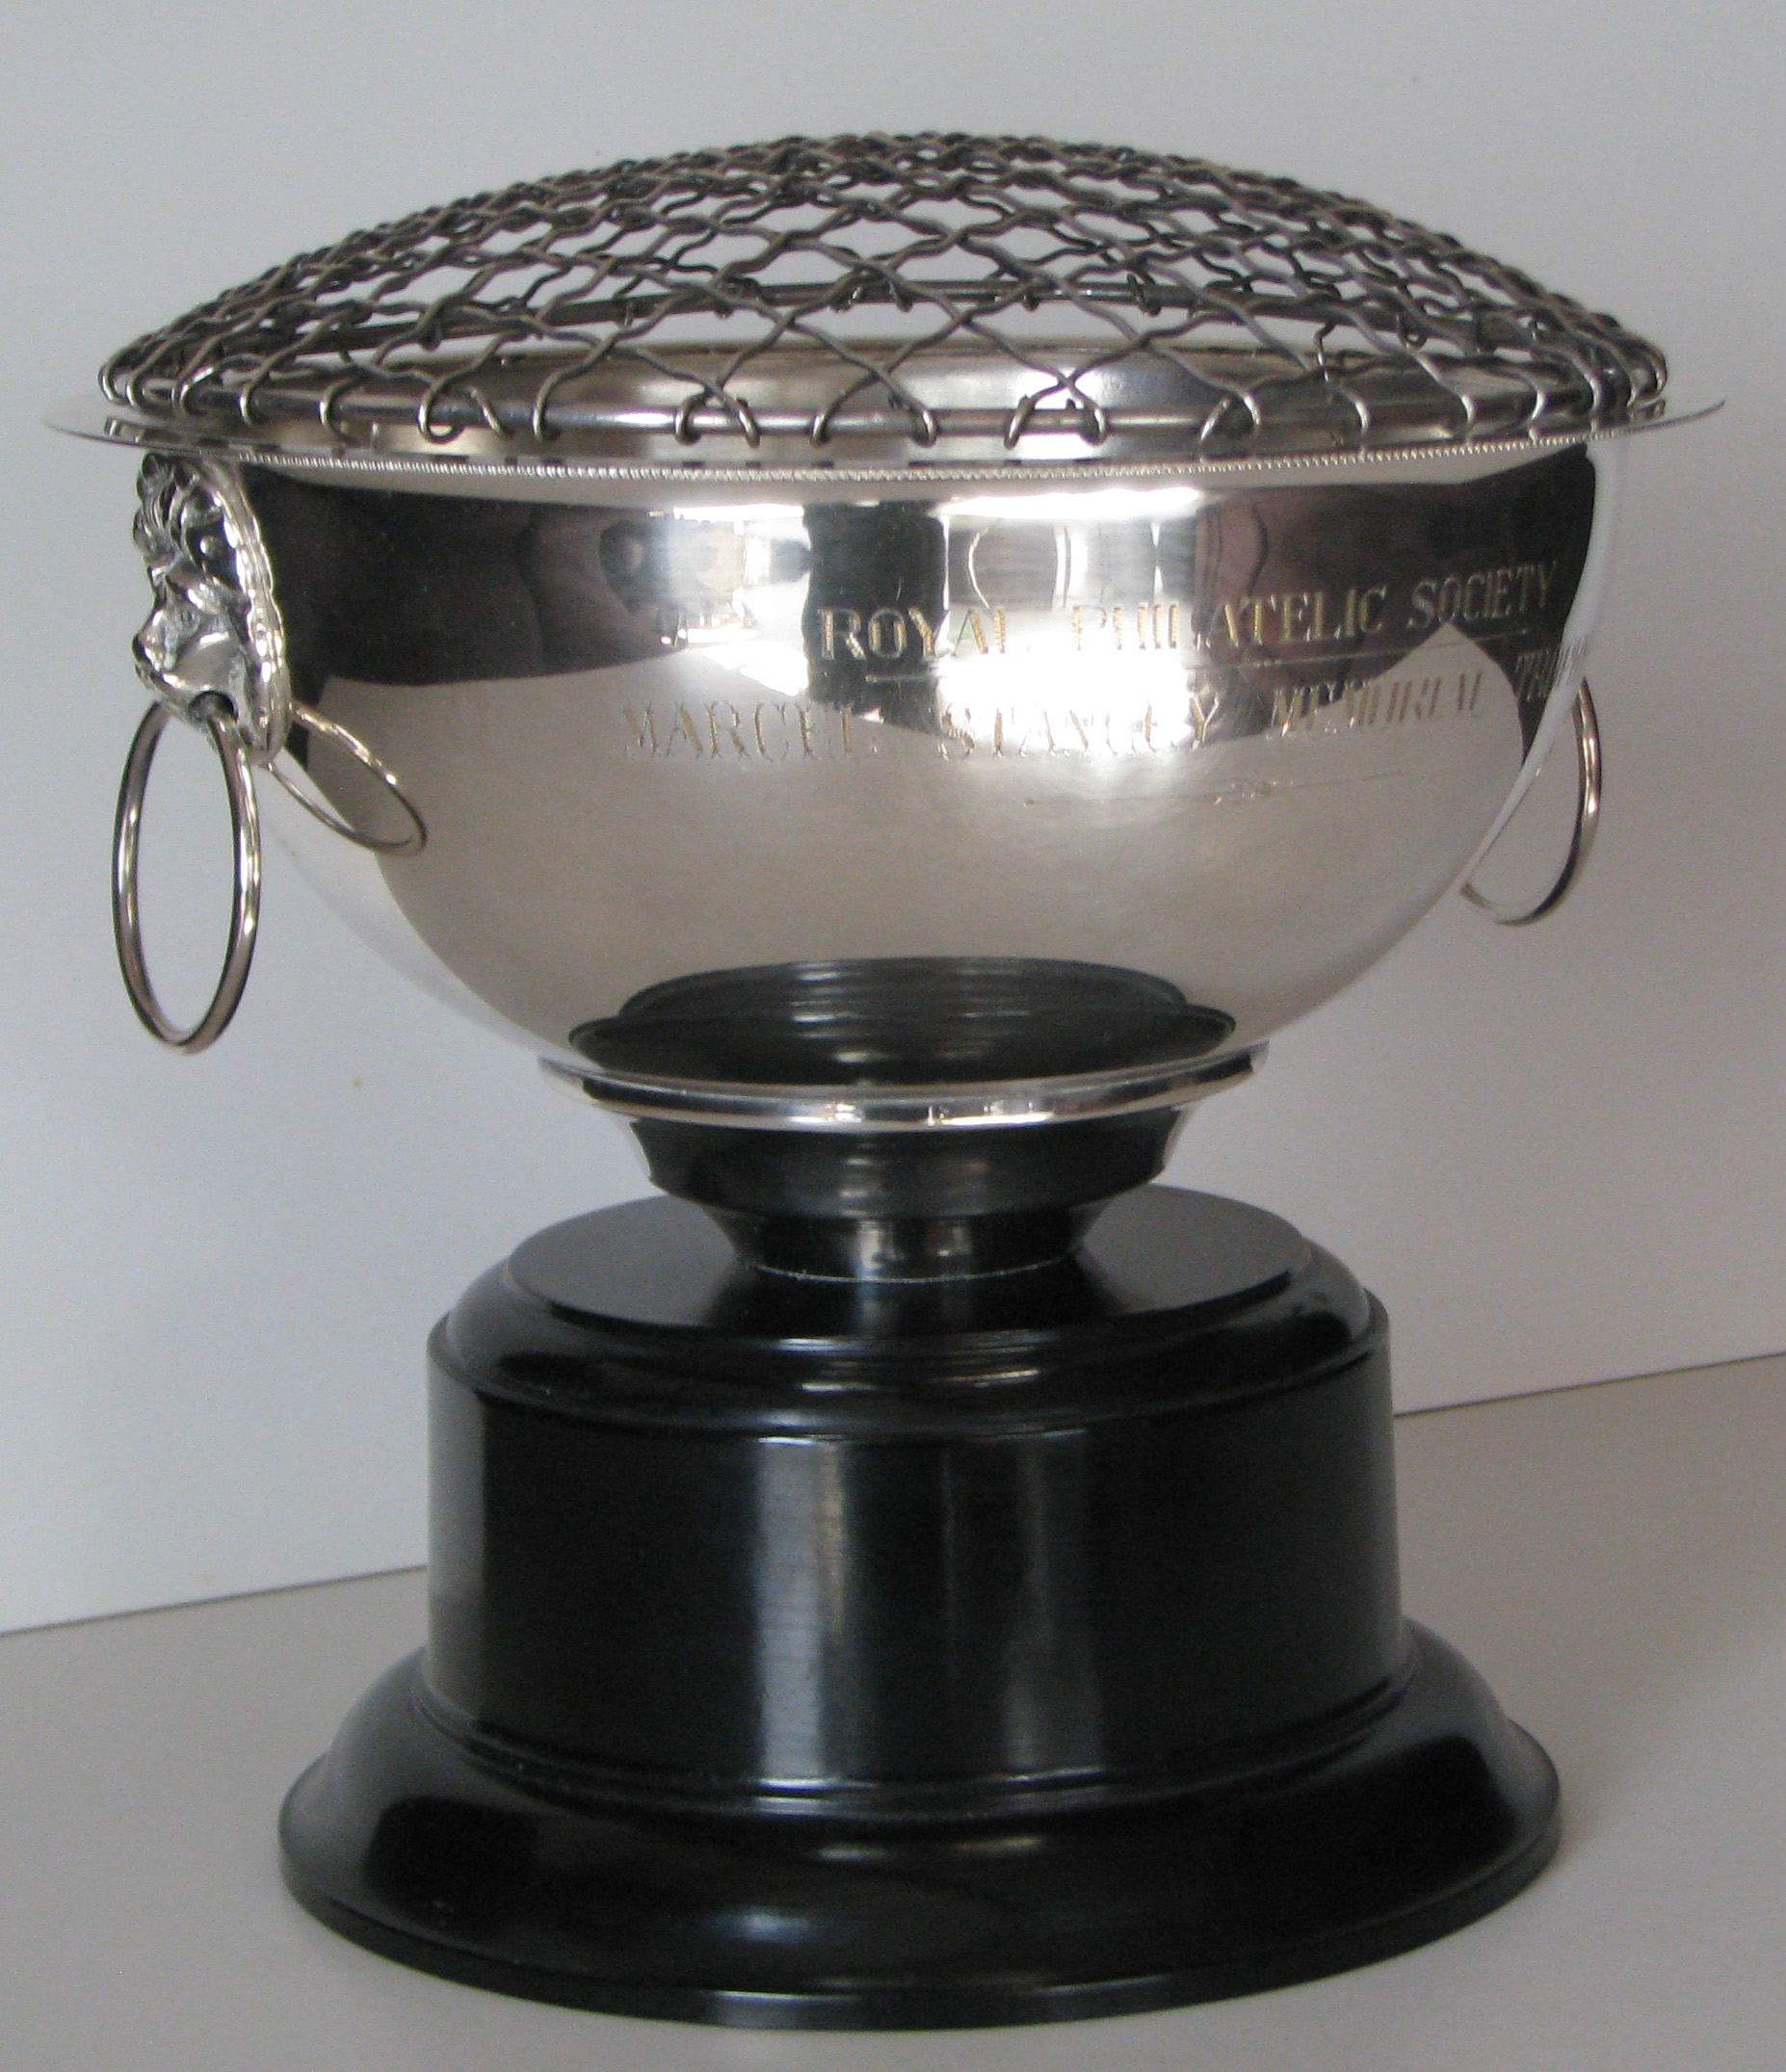 Marcel Stanley trophy